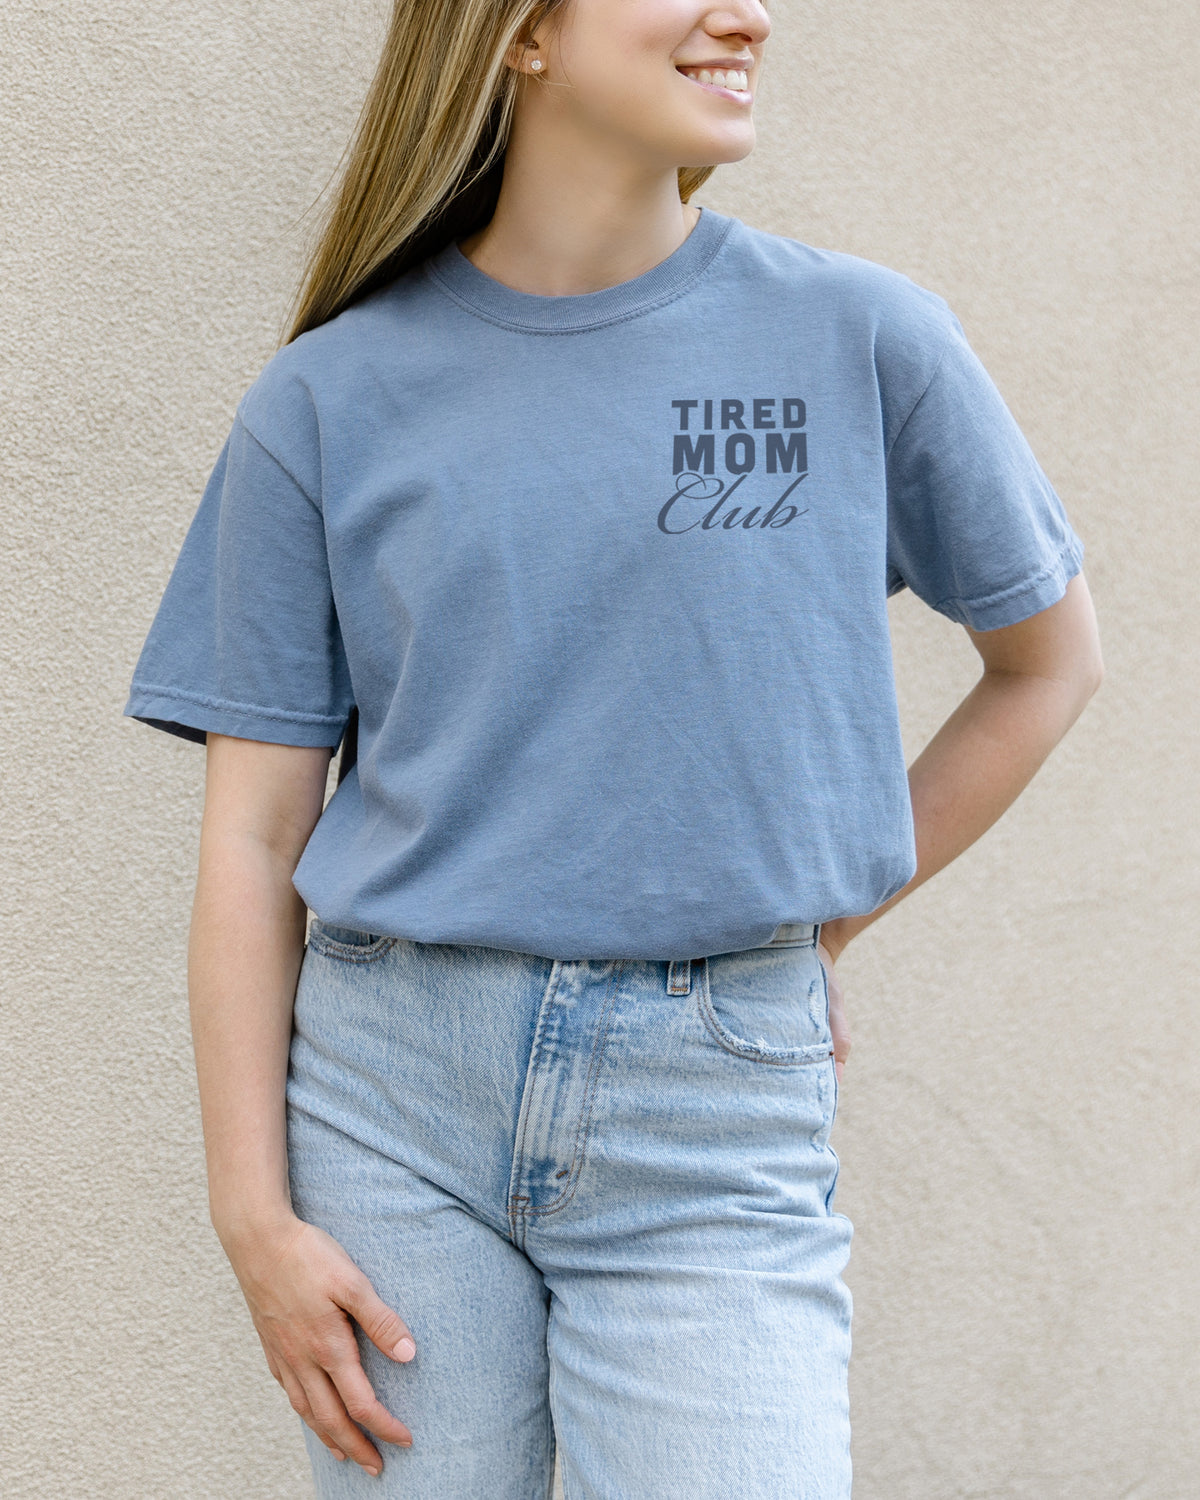 Tired Mom Club T-shirt - Blue Jean